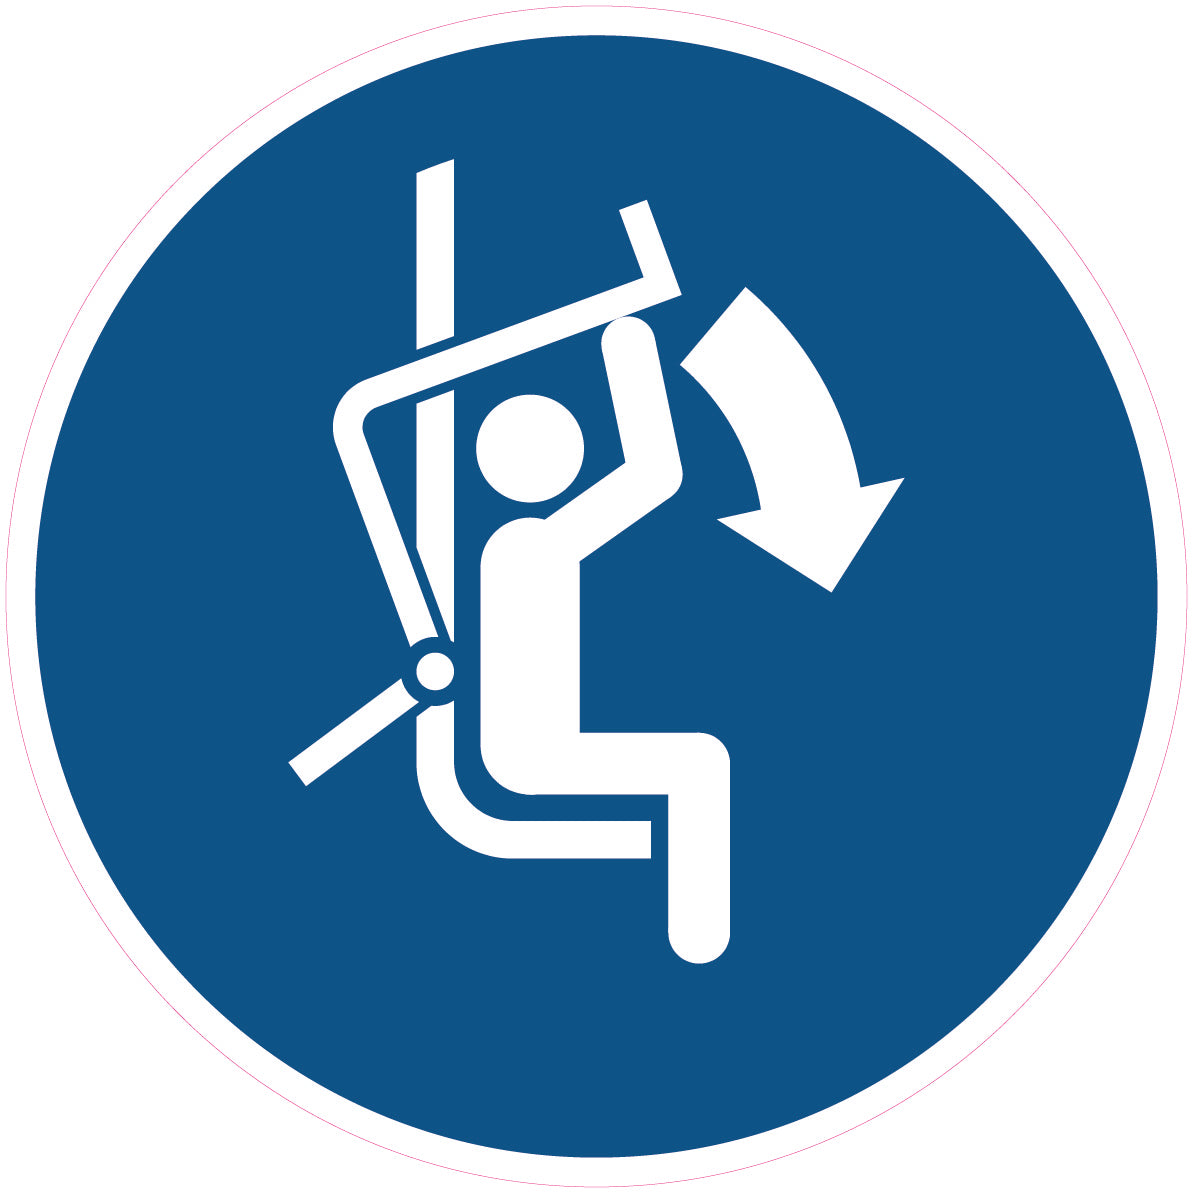 Gebod Beugel stoeltjeslift sluiten | Pictogram sticker